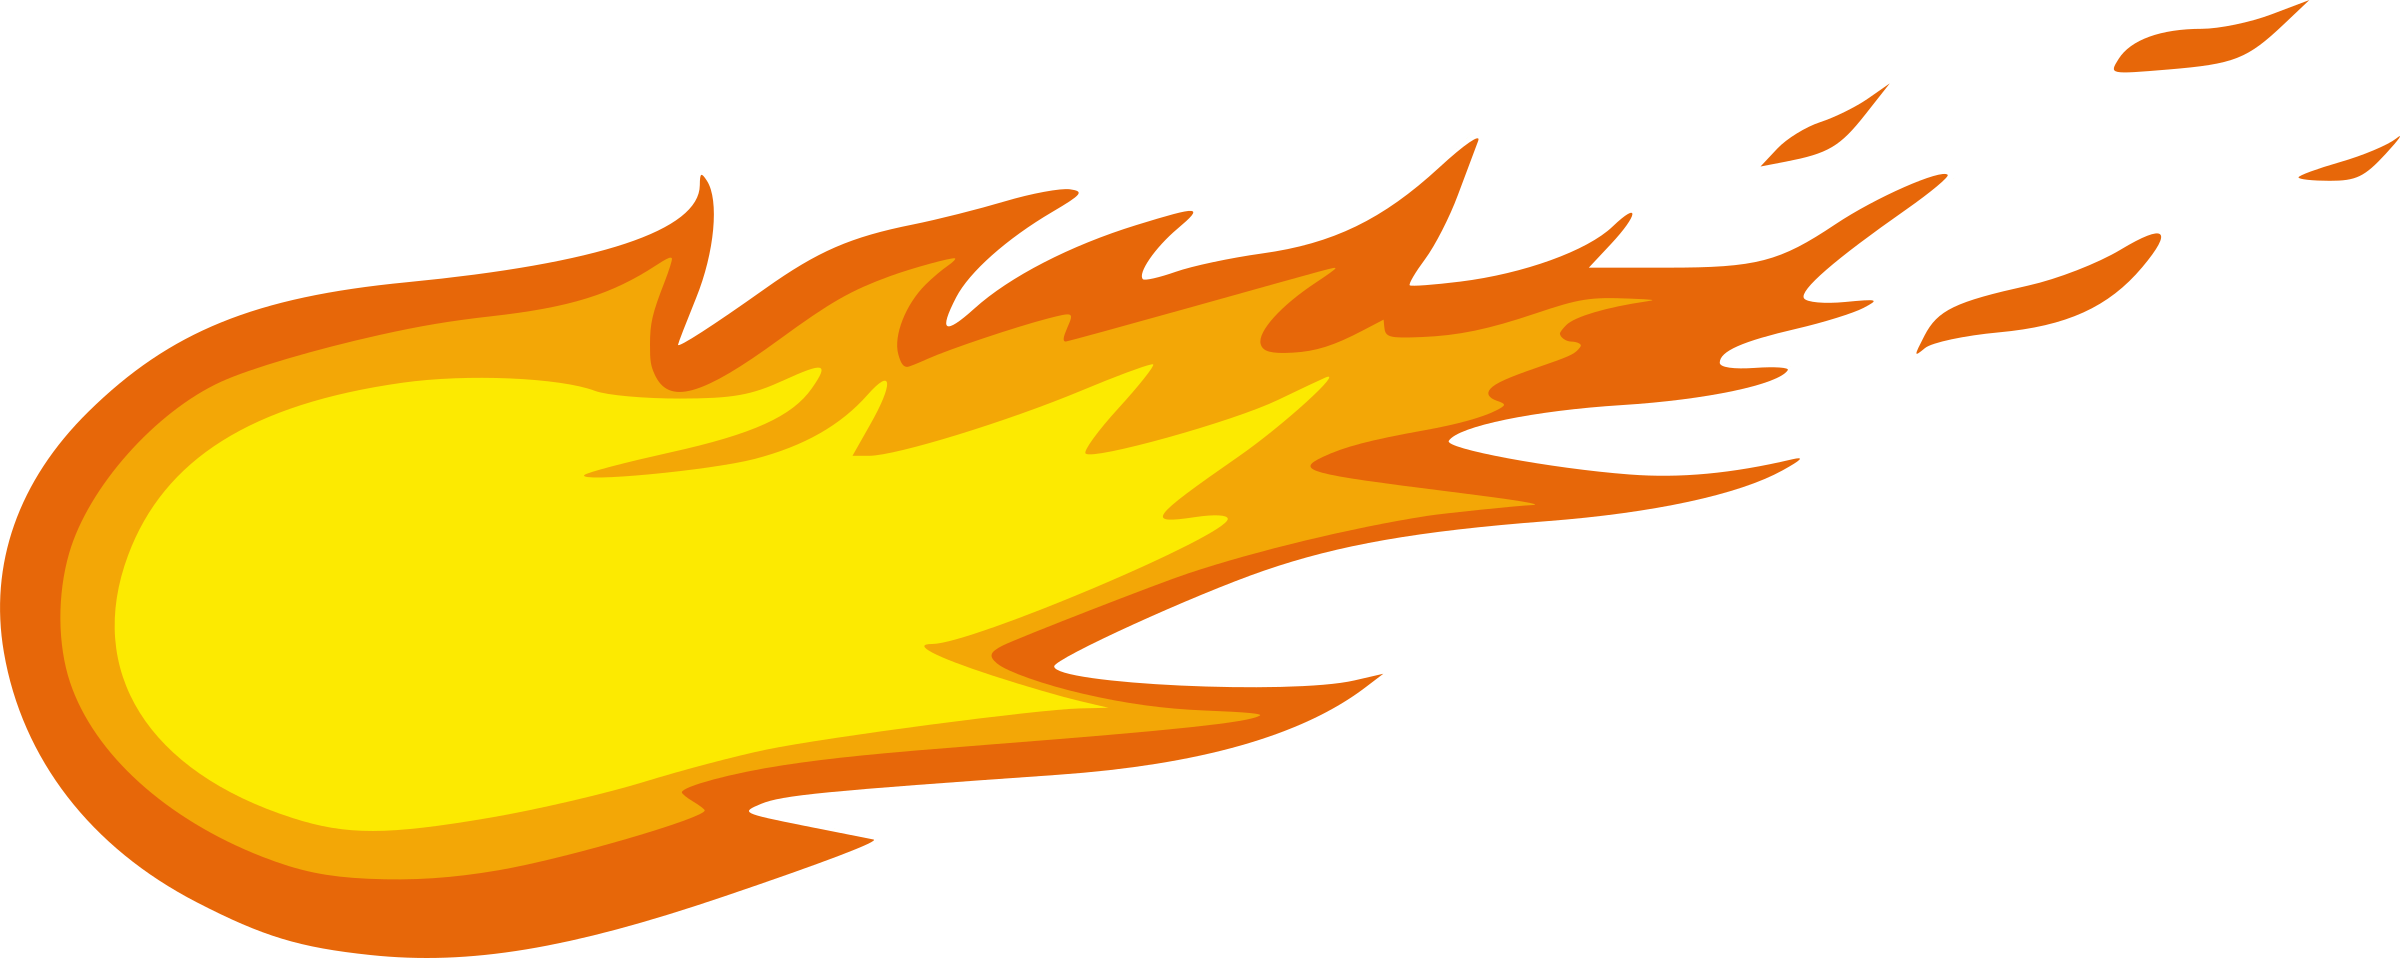 Explosion Riot Blast Blaze Fireball PNG